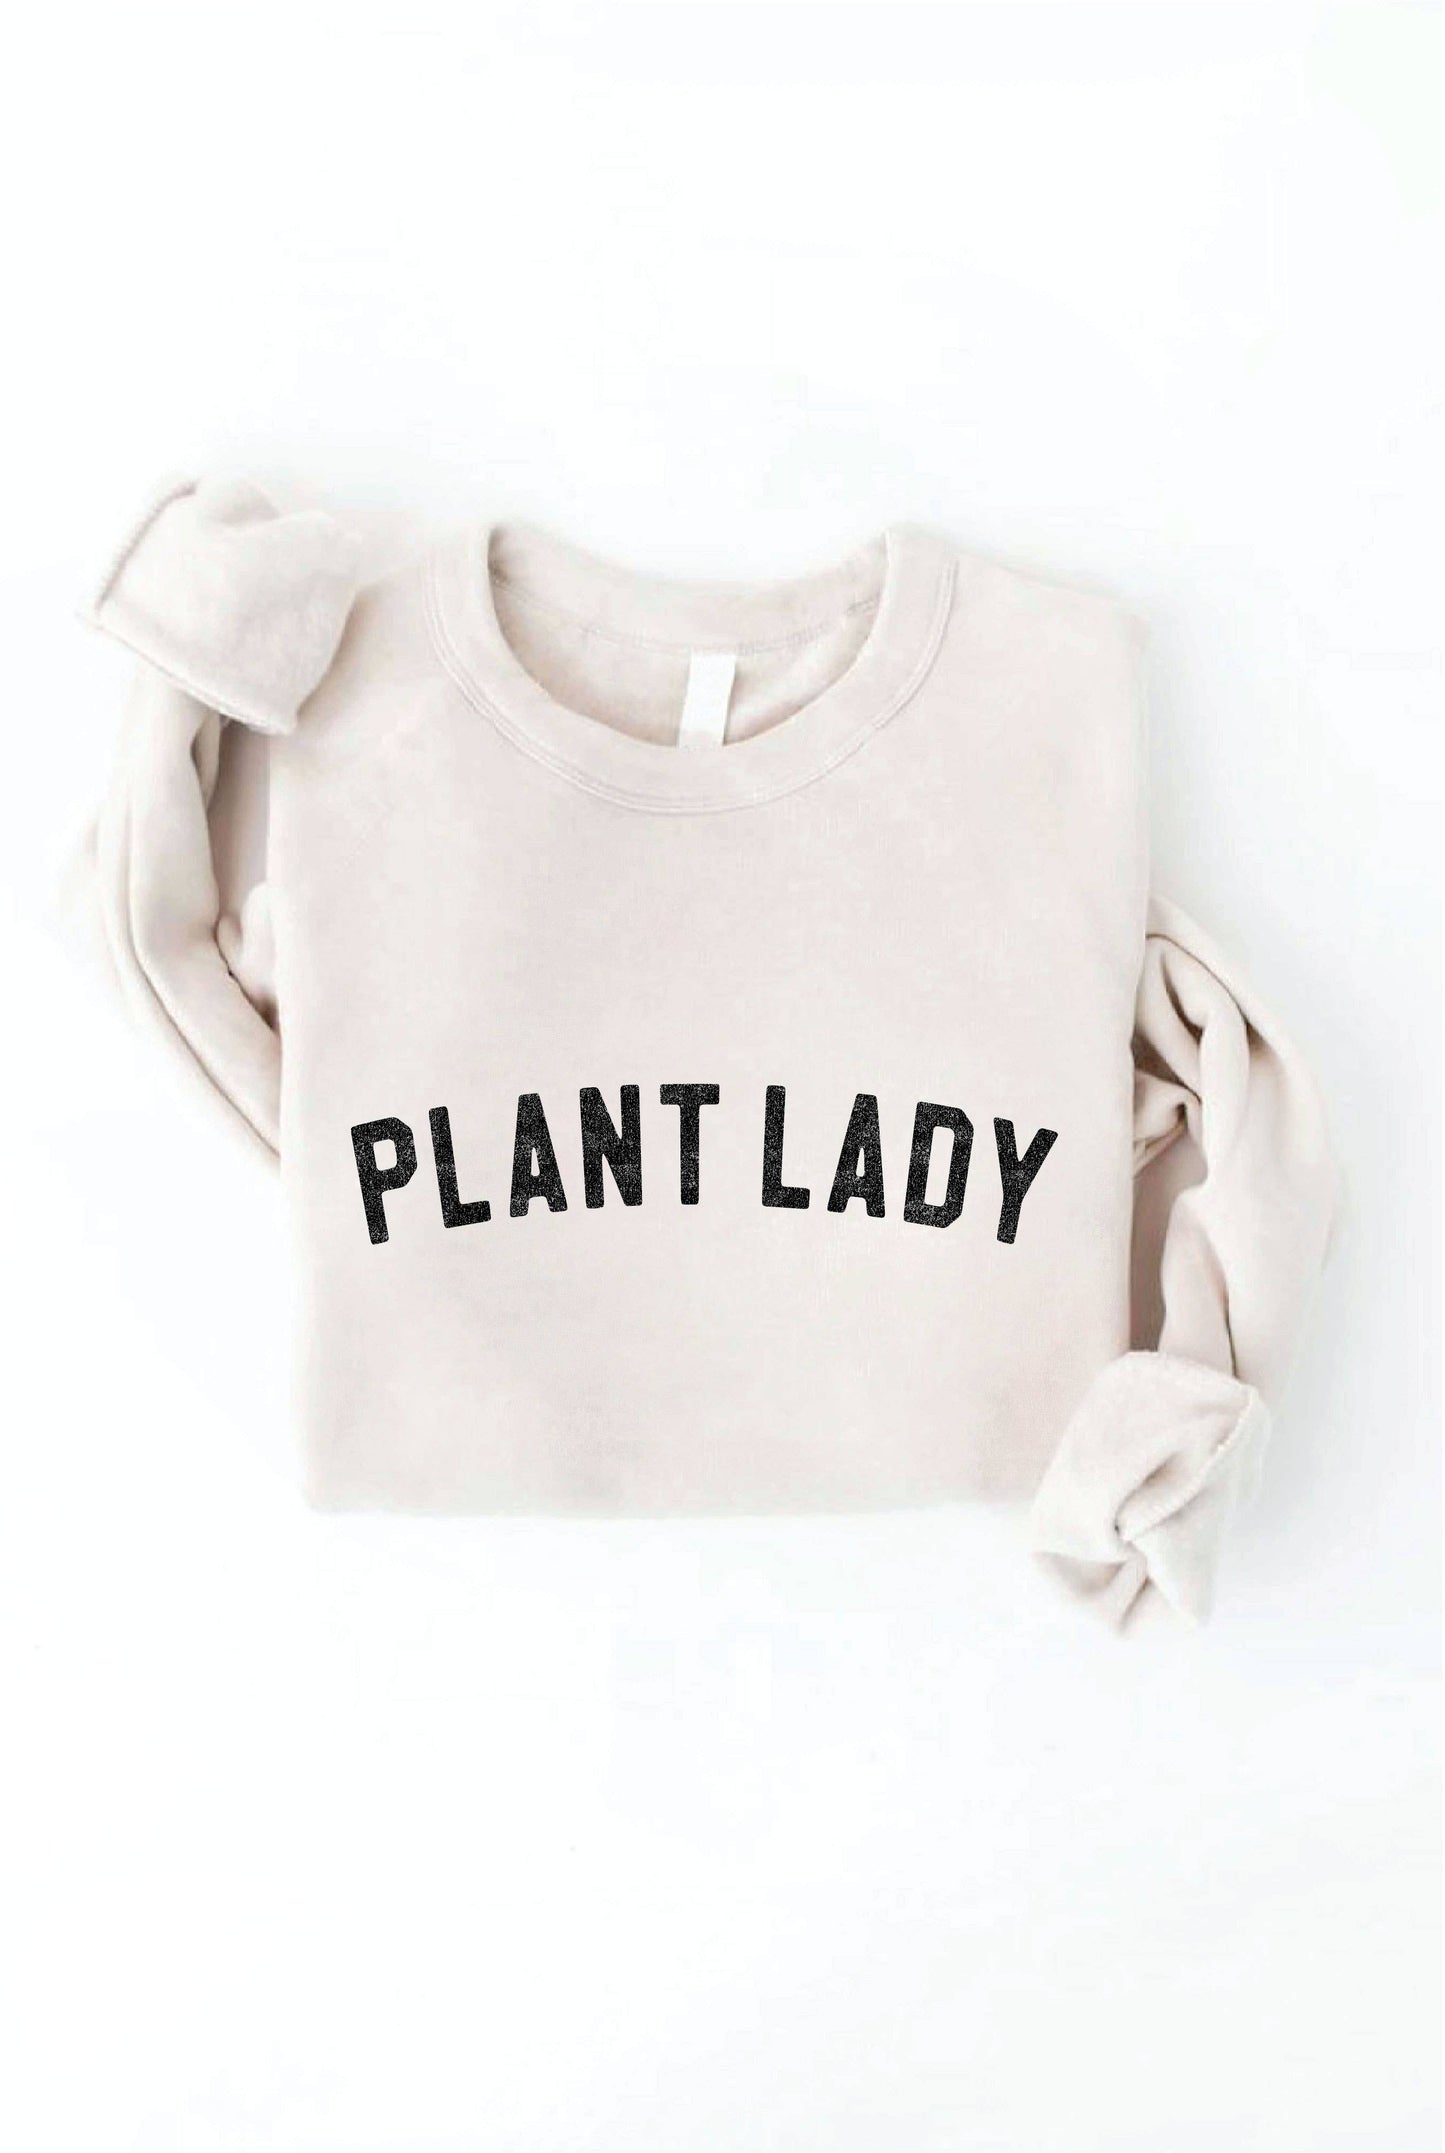 PLANT LADY Print Graphic Sweatshirt: M / HEATHER FOREST